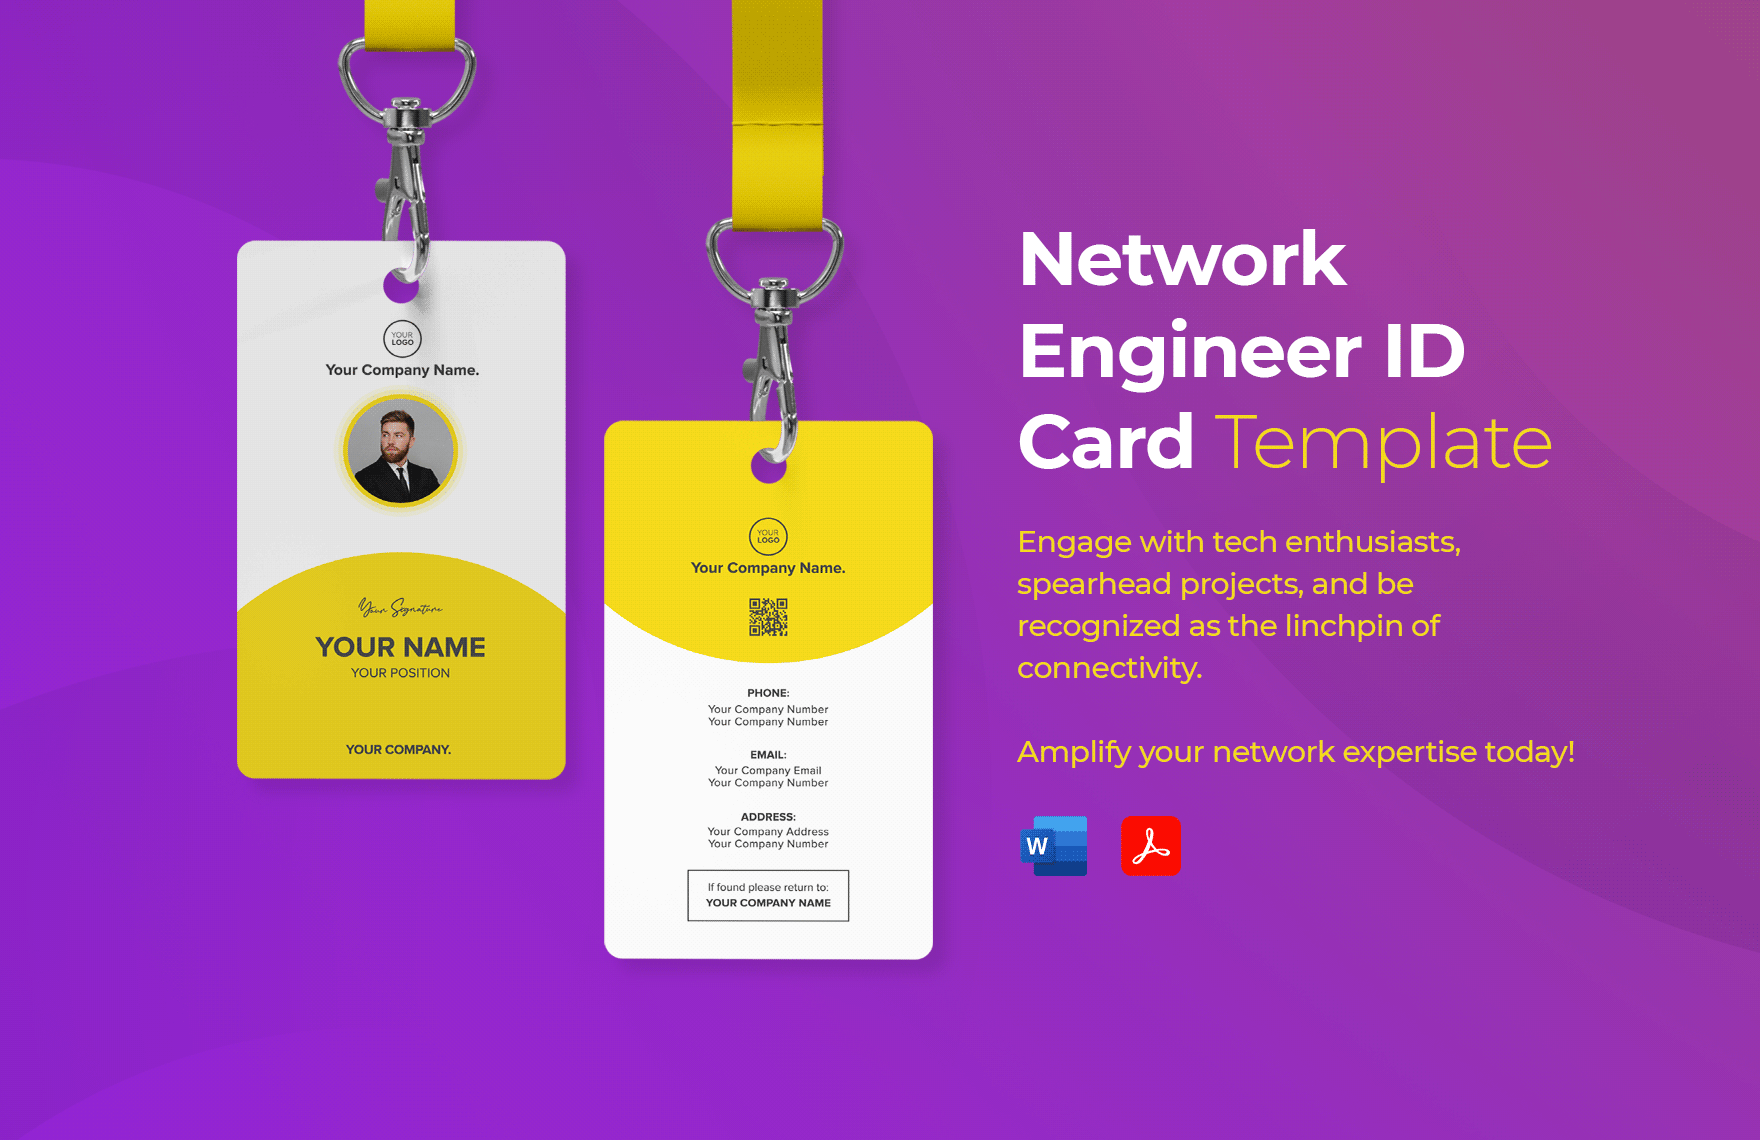 Network Engineer ID Card Template